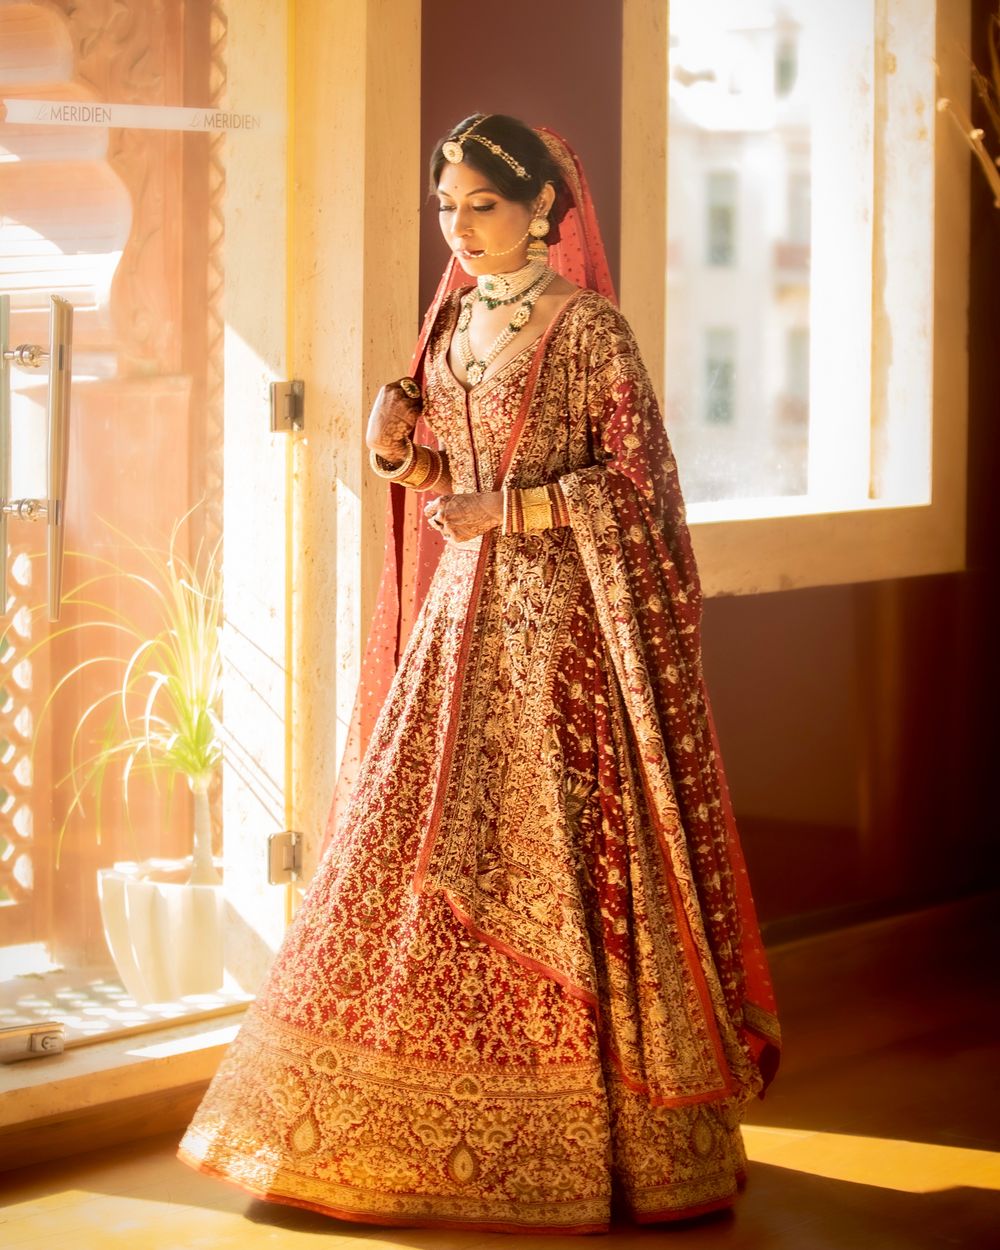 Photo of Bride dressed in a regal bridal lehenga.